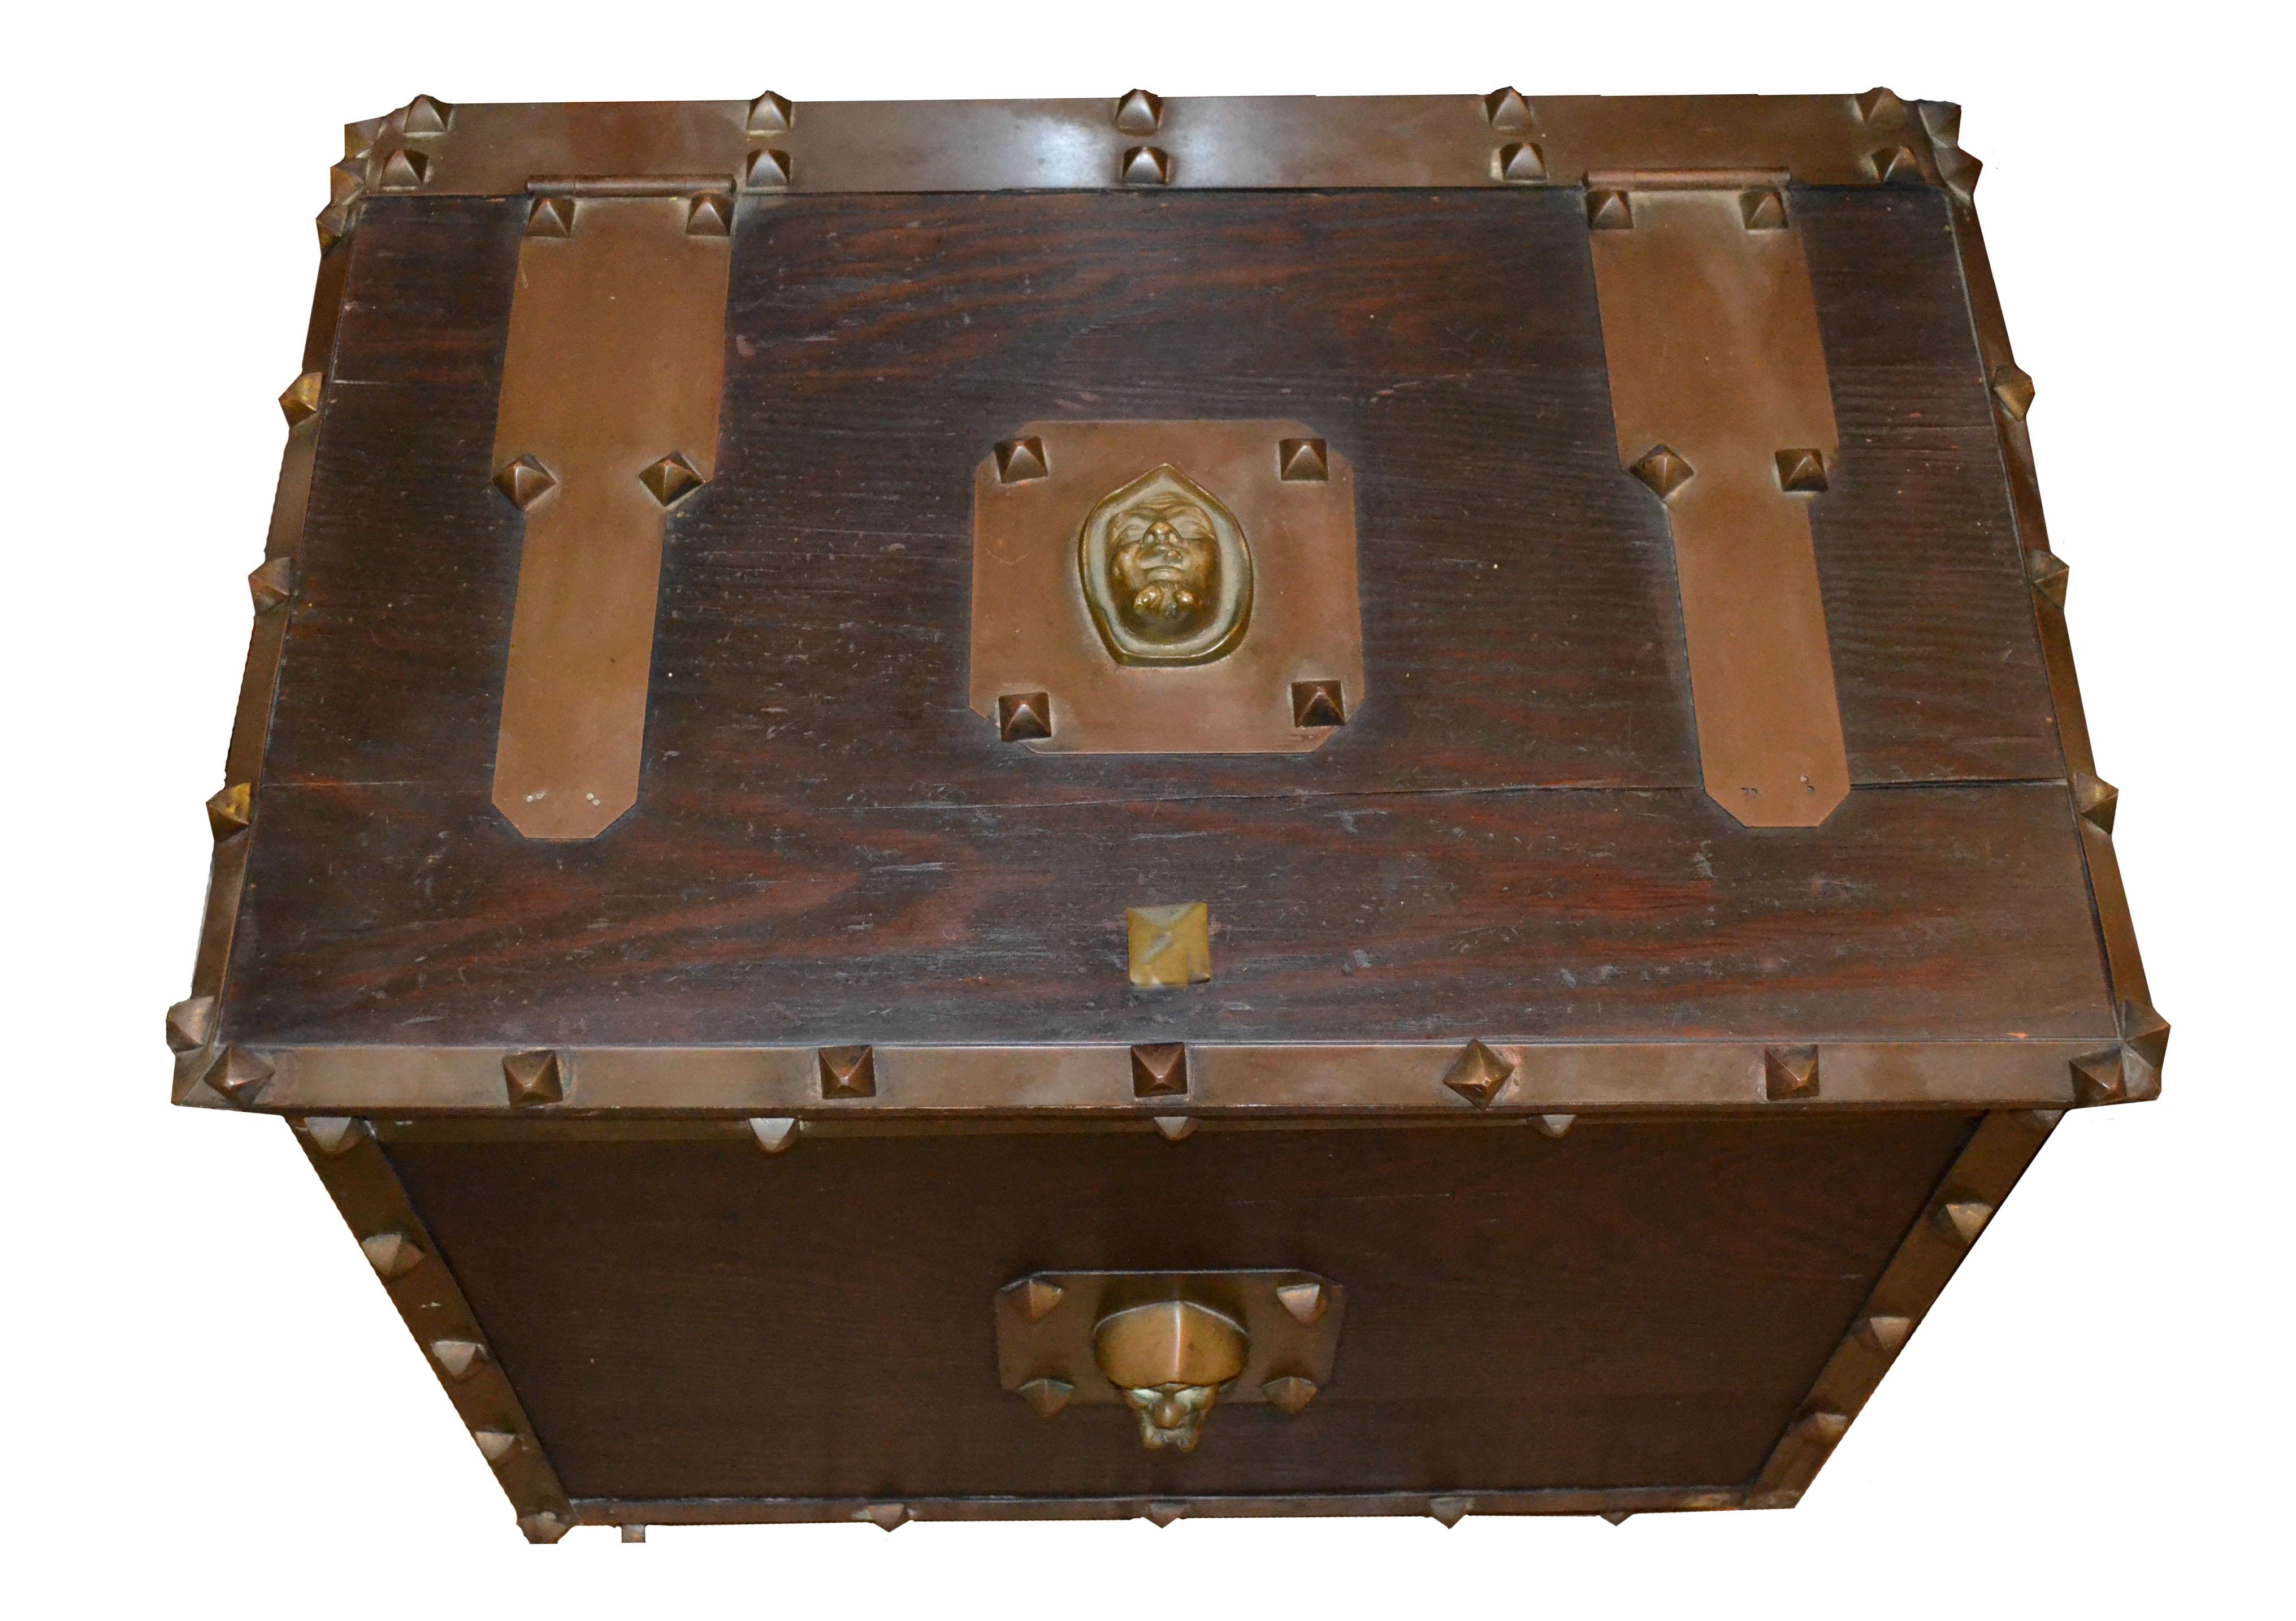 Antique pine and brass coal/tinder box with unique jesting friar bronze sculptures/handles, circa 1900. Dimensions: 21.5